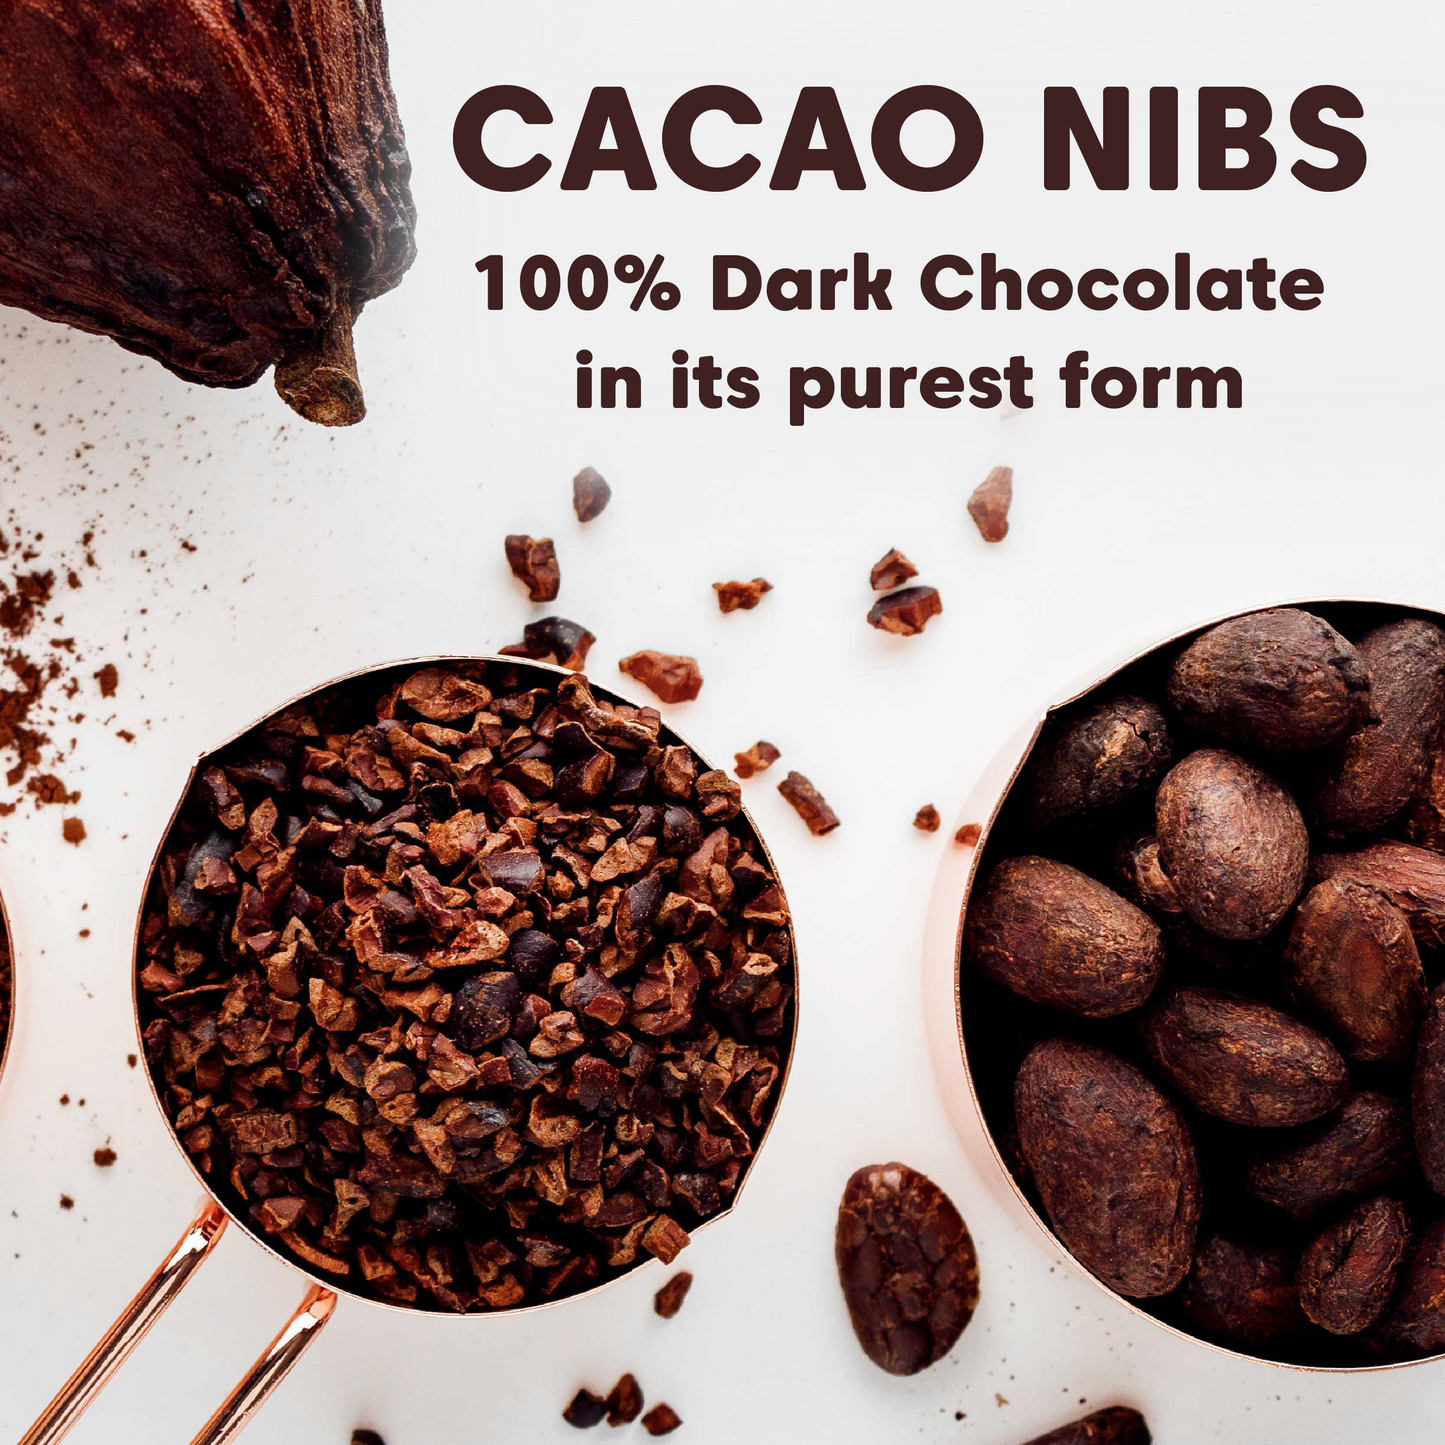 Cacao Nibs - Unsweetened, Organic